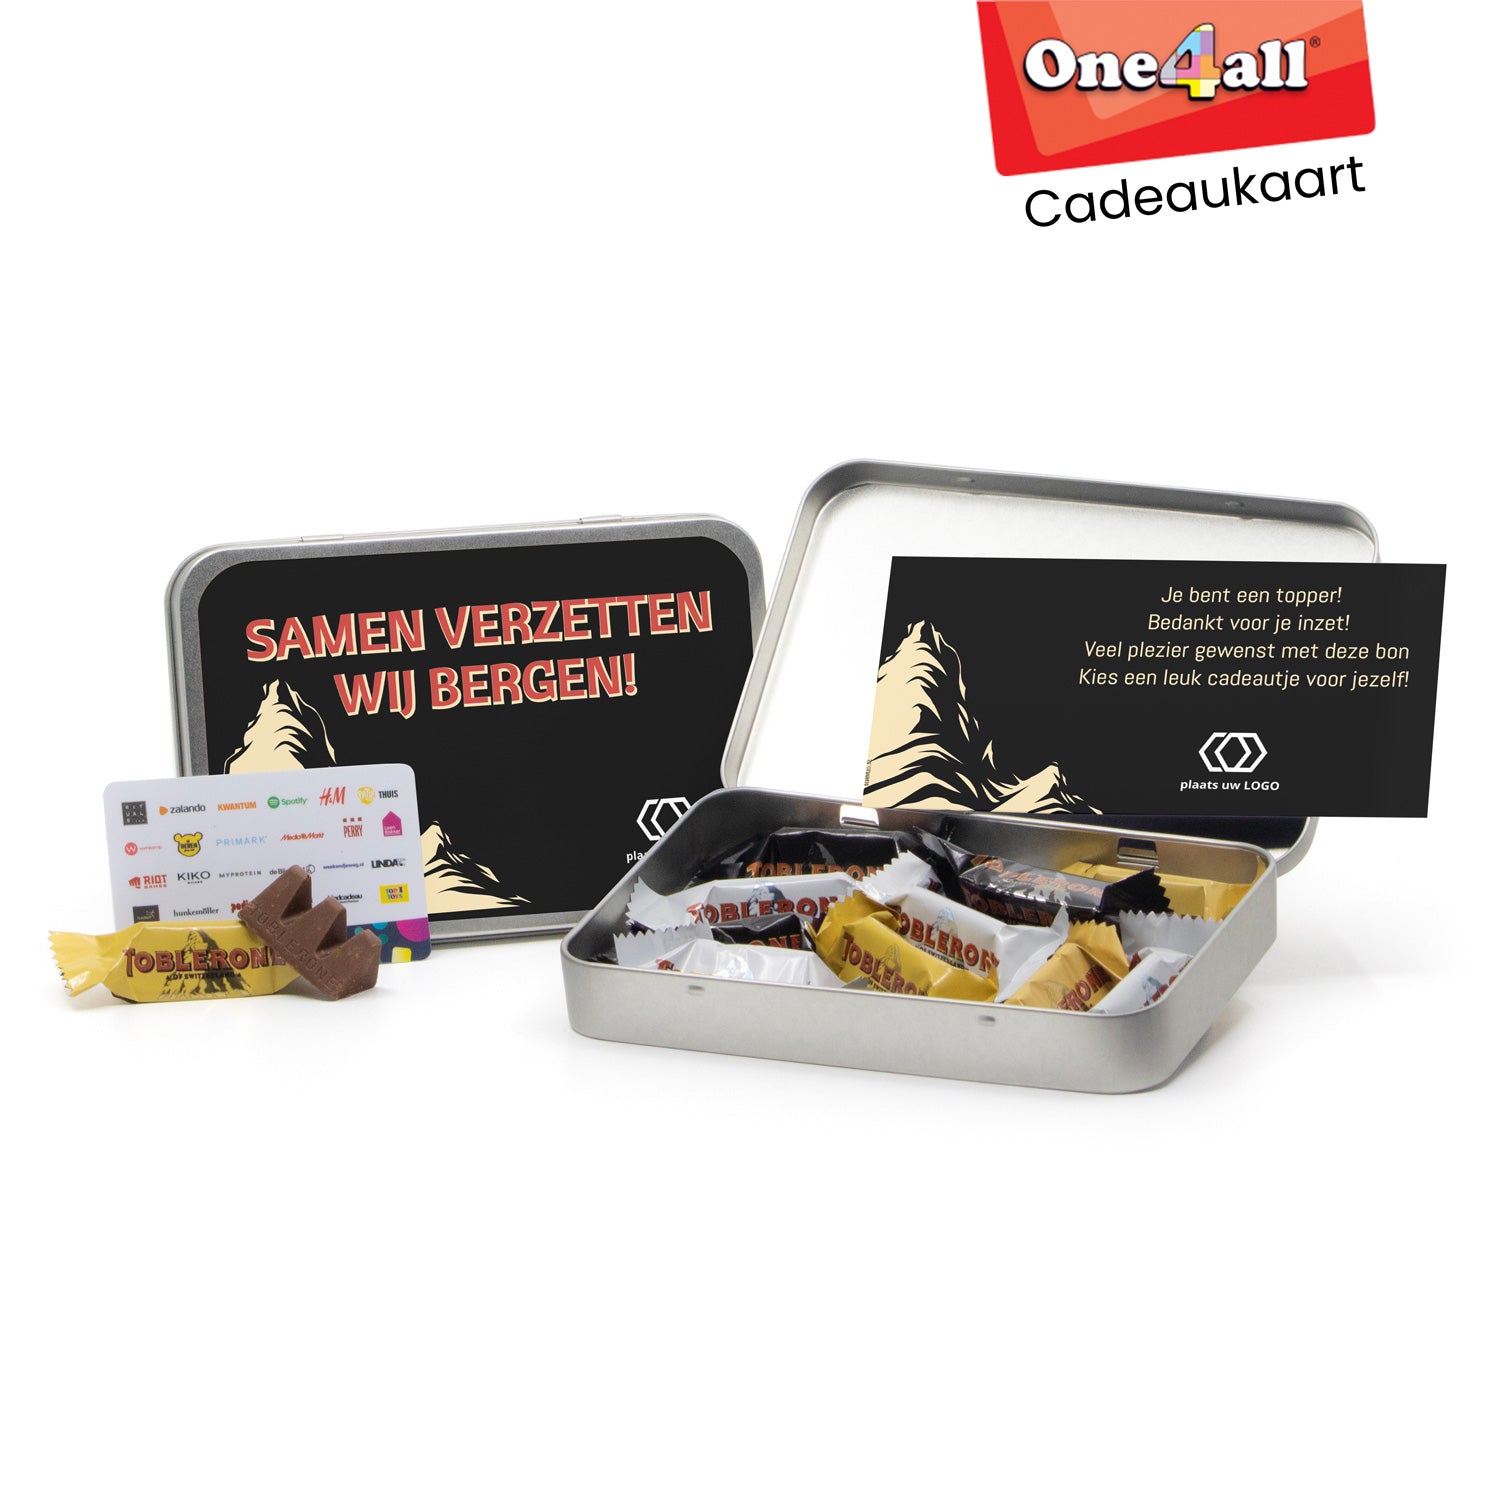 Toblerone in blik met One4All cadeaukaart - Vrijwilliger - Bedankjes.nl